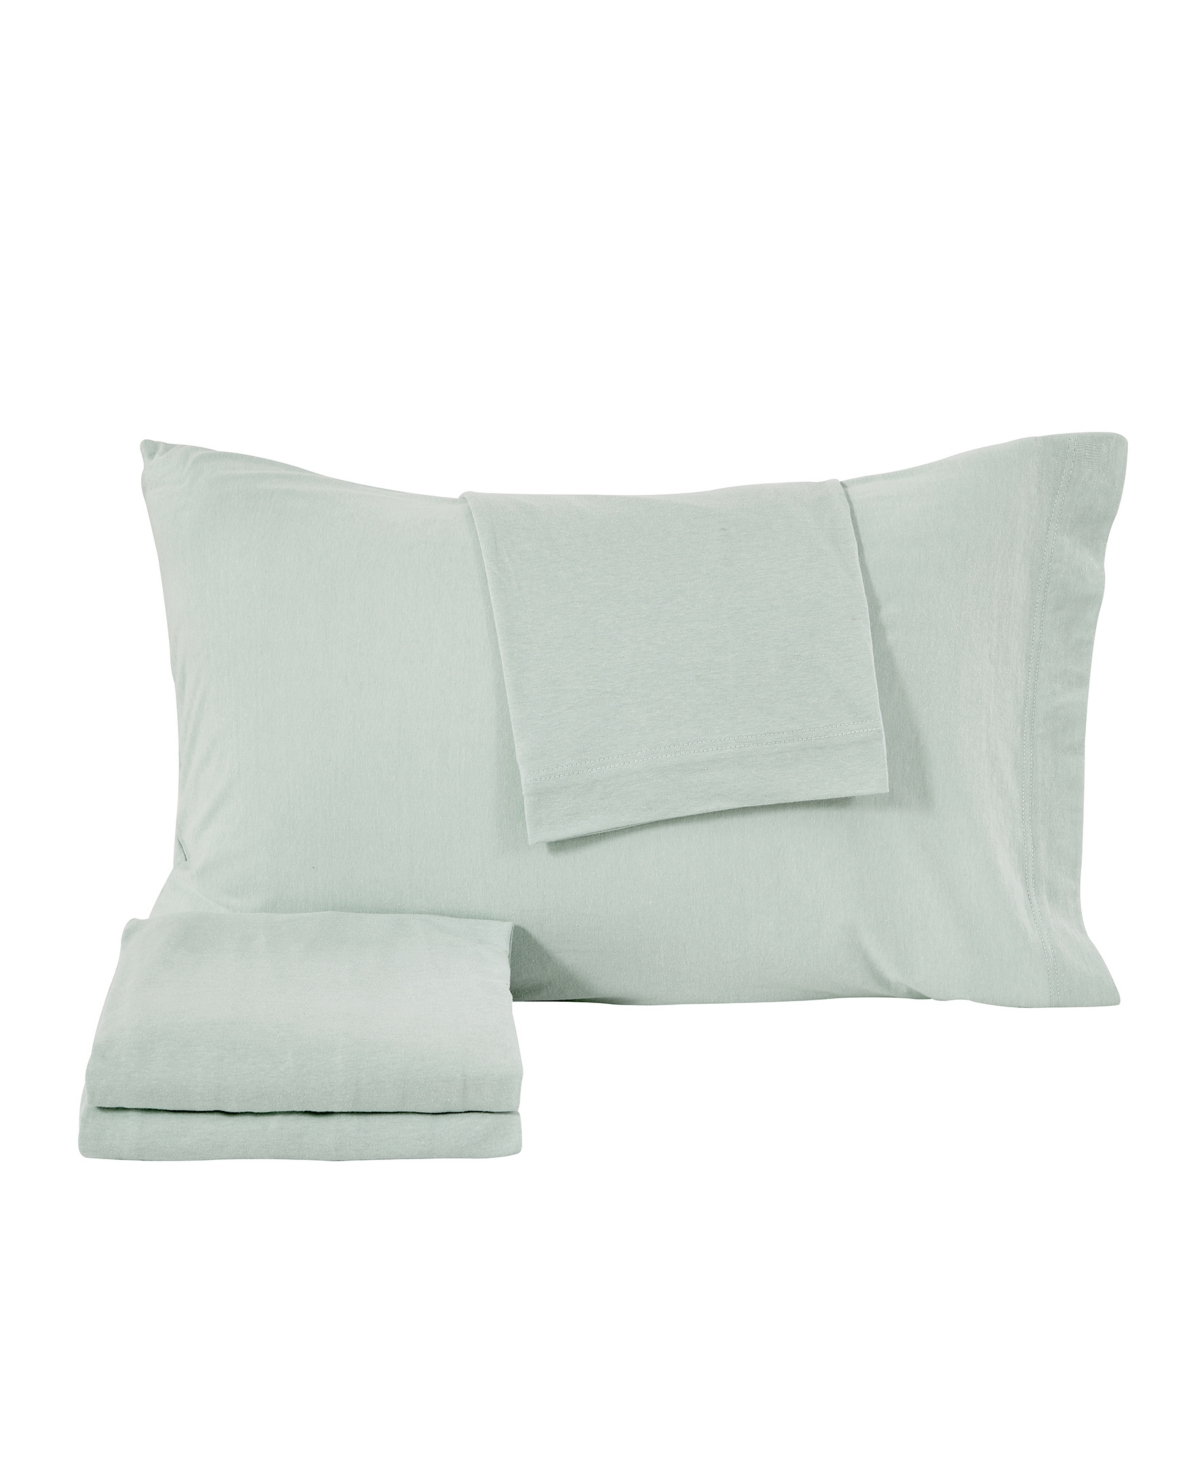 Premium Comforts Heathered Melange T-shirt Jersey Knit Cotton Blend 4 Piece Sheet Set, Twin Xl In Heathered Aqua